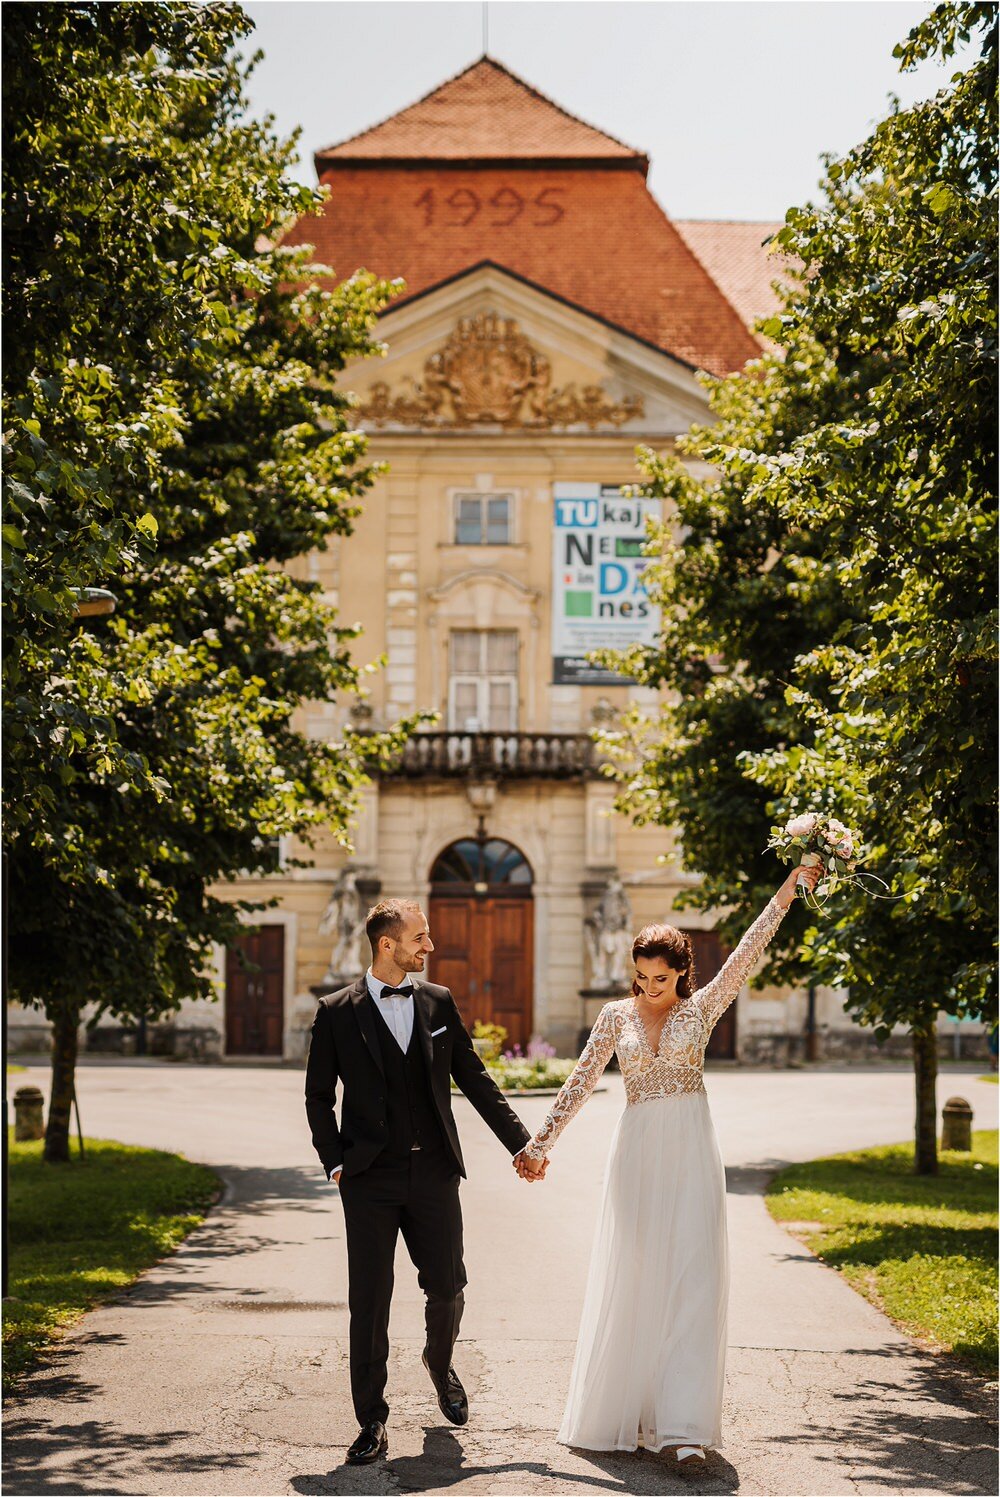 jelenov greben olimje poroka wedding slovenia outdoor storija weddings deer nika grega romantic wedding photographer 0035.jpg